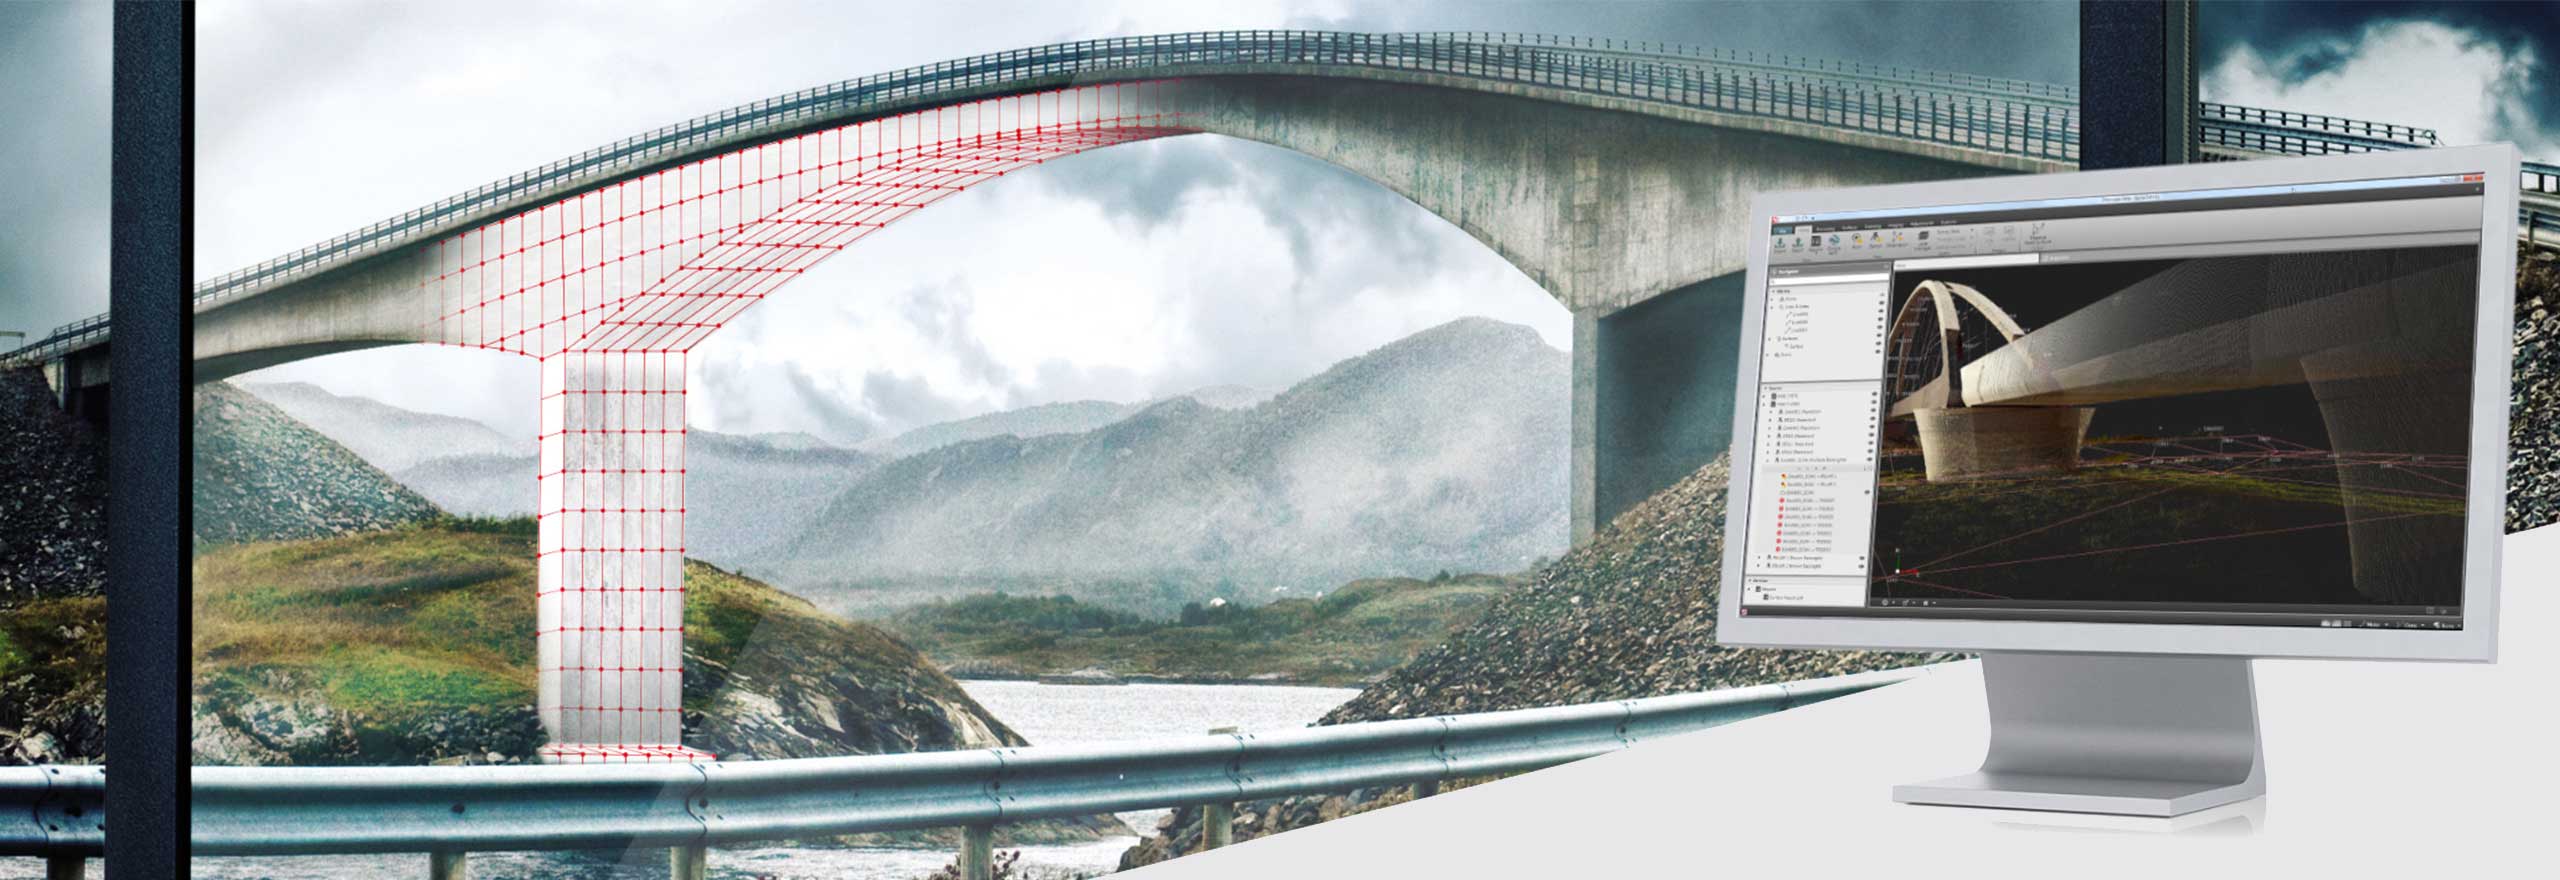 digital model of a bridge visualised in Leica Infinity survey software 